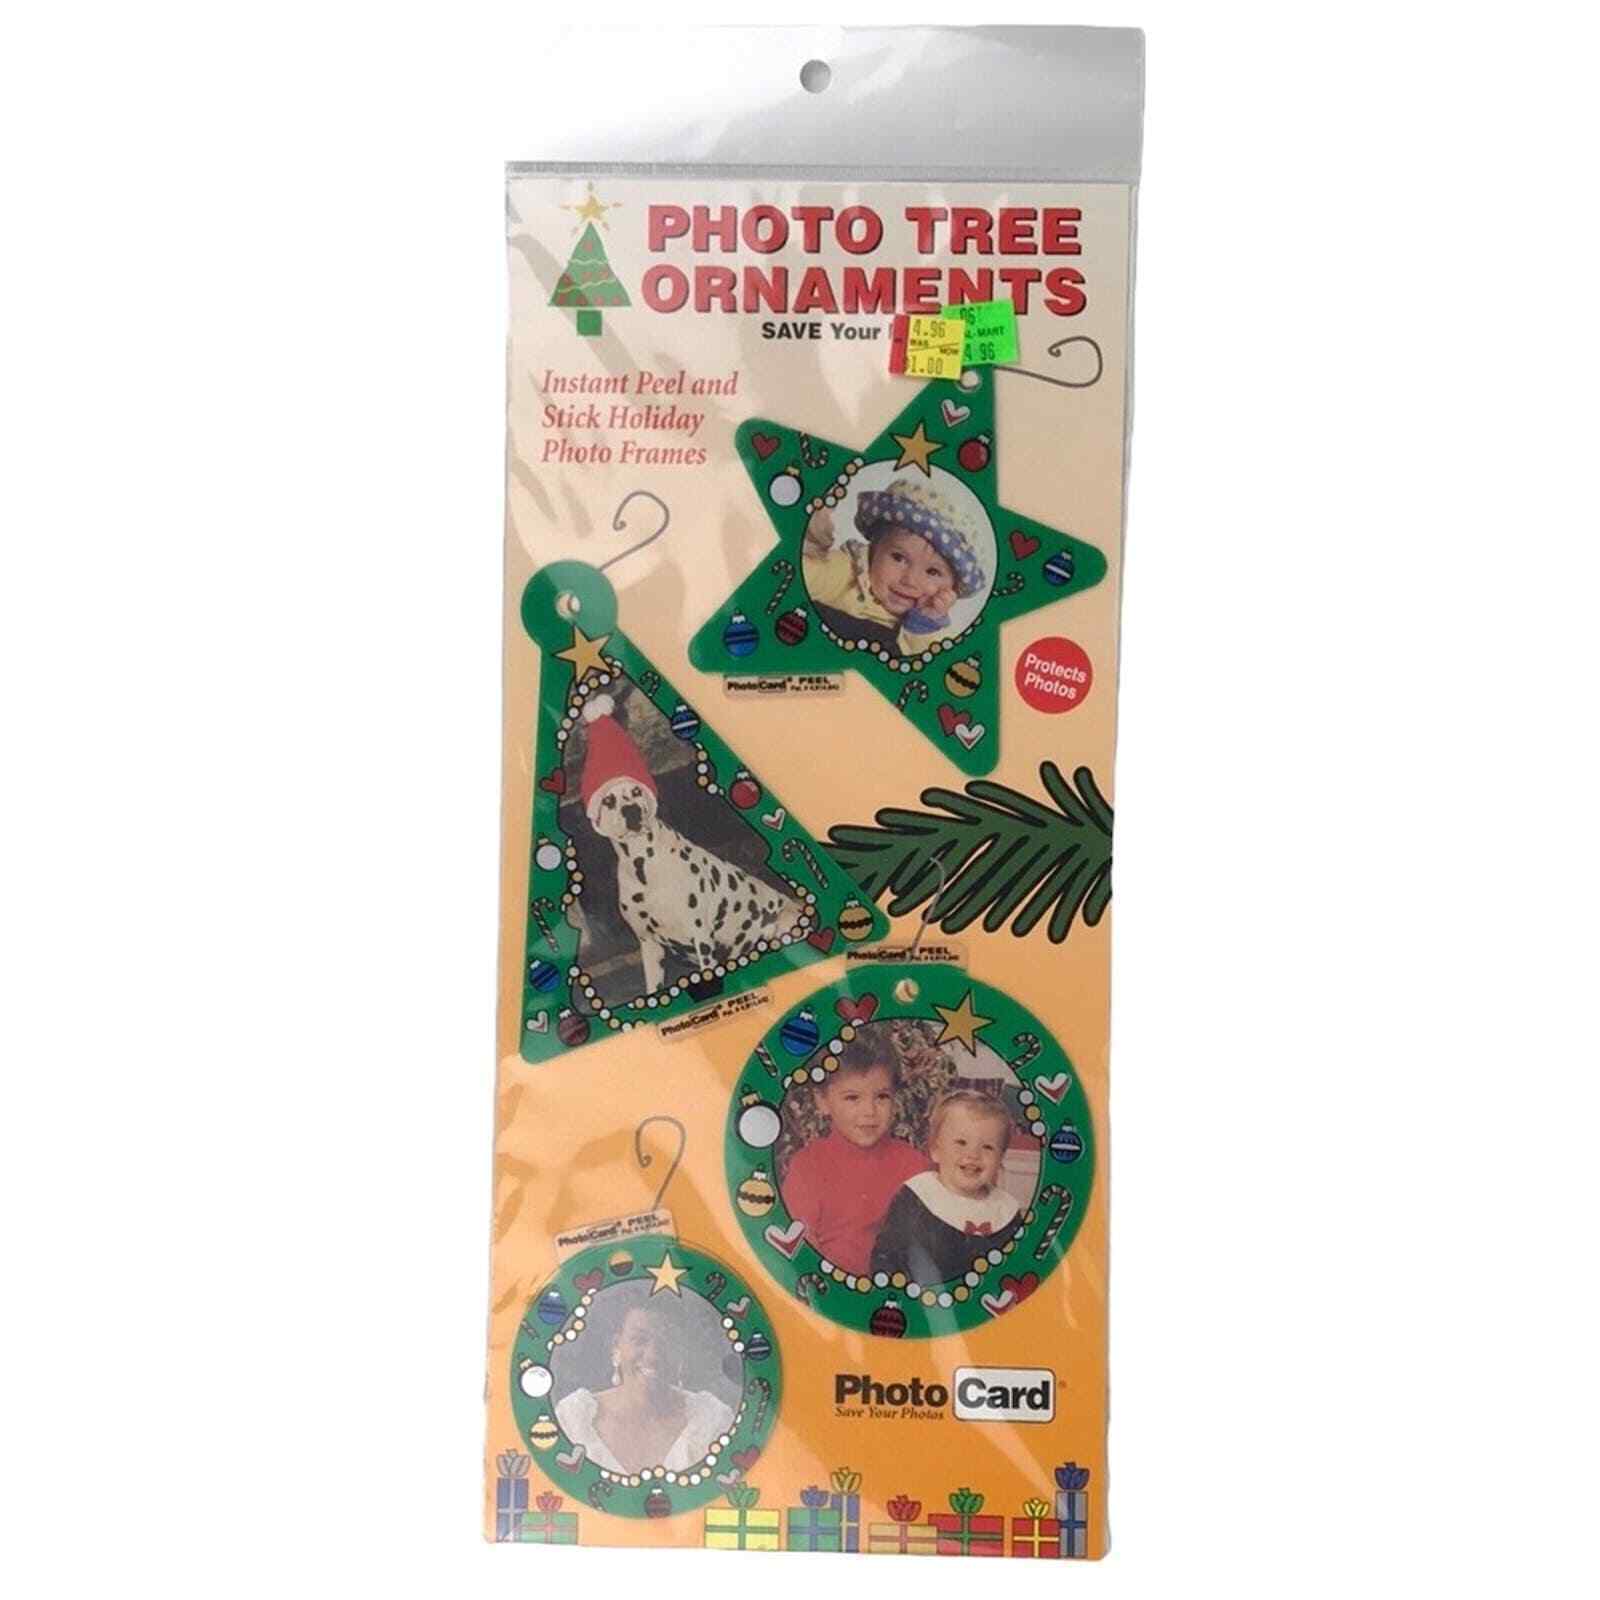 NOS Vintage PhotoCard Set 4 Photo Tree Ornaments Green String Lights Print Star